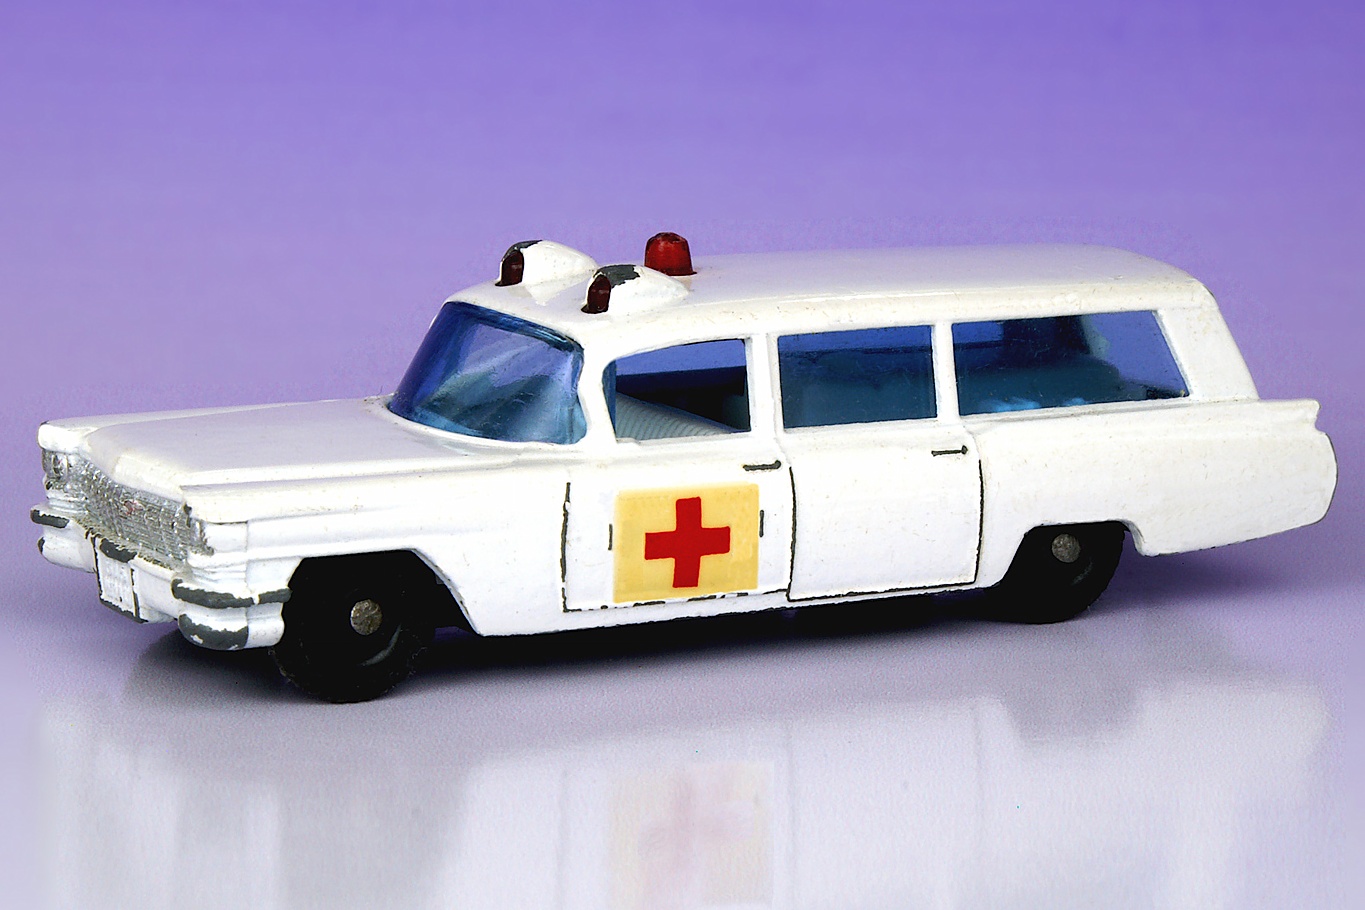 matchbox series no 54 s&s cadillac ambulance